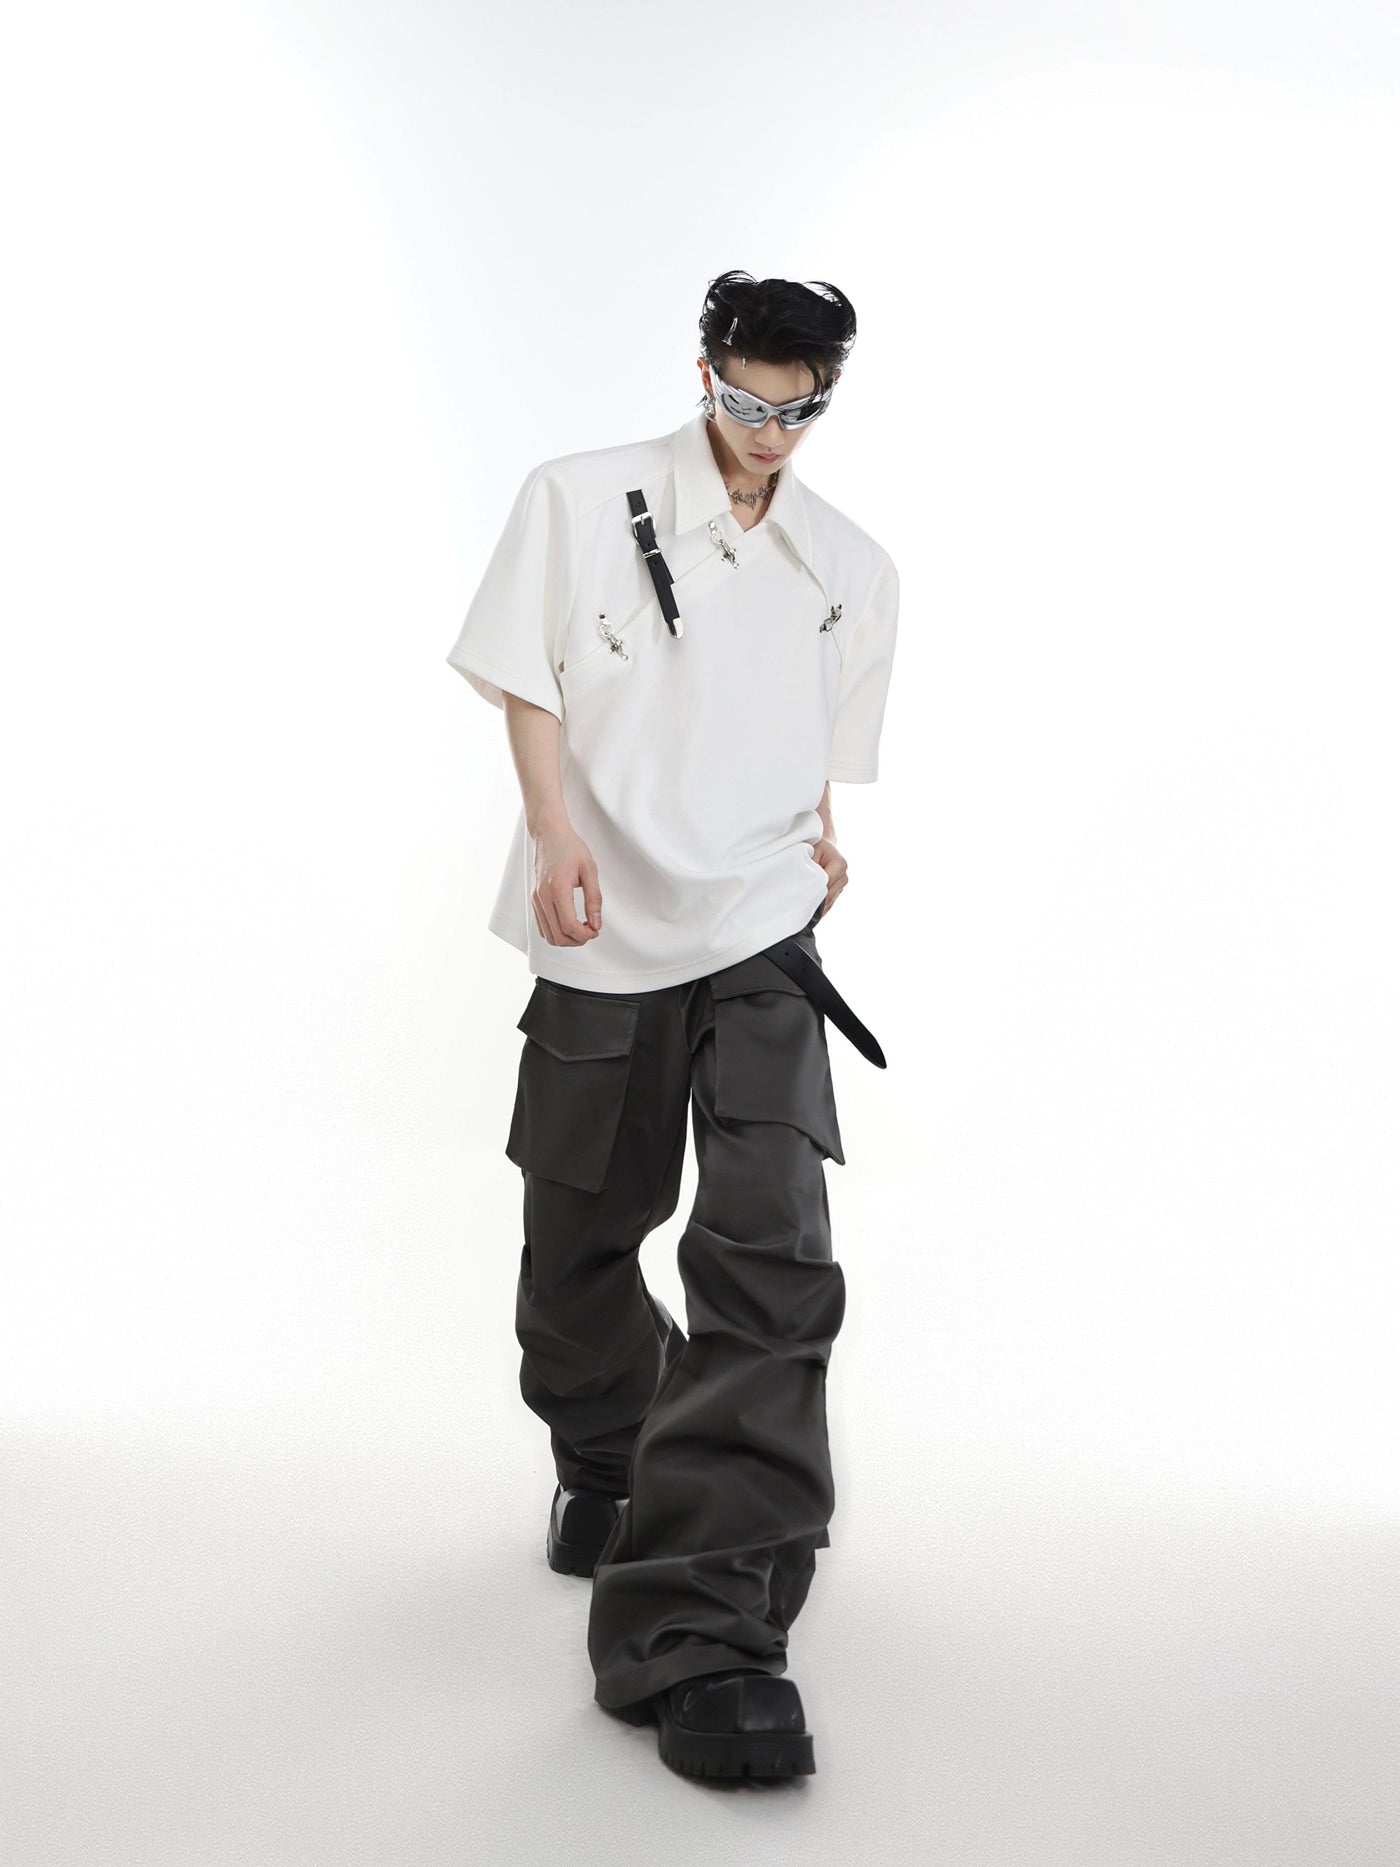 Strap Belt and Metal Link Shirt Korean Street Fashion Shirt By Argue Culture Shop Online at OH Vault